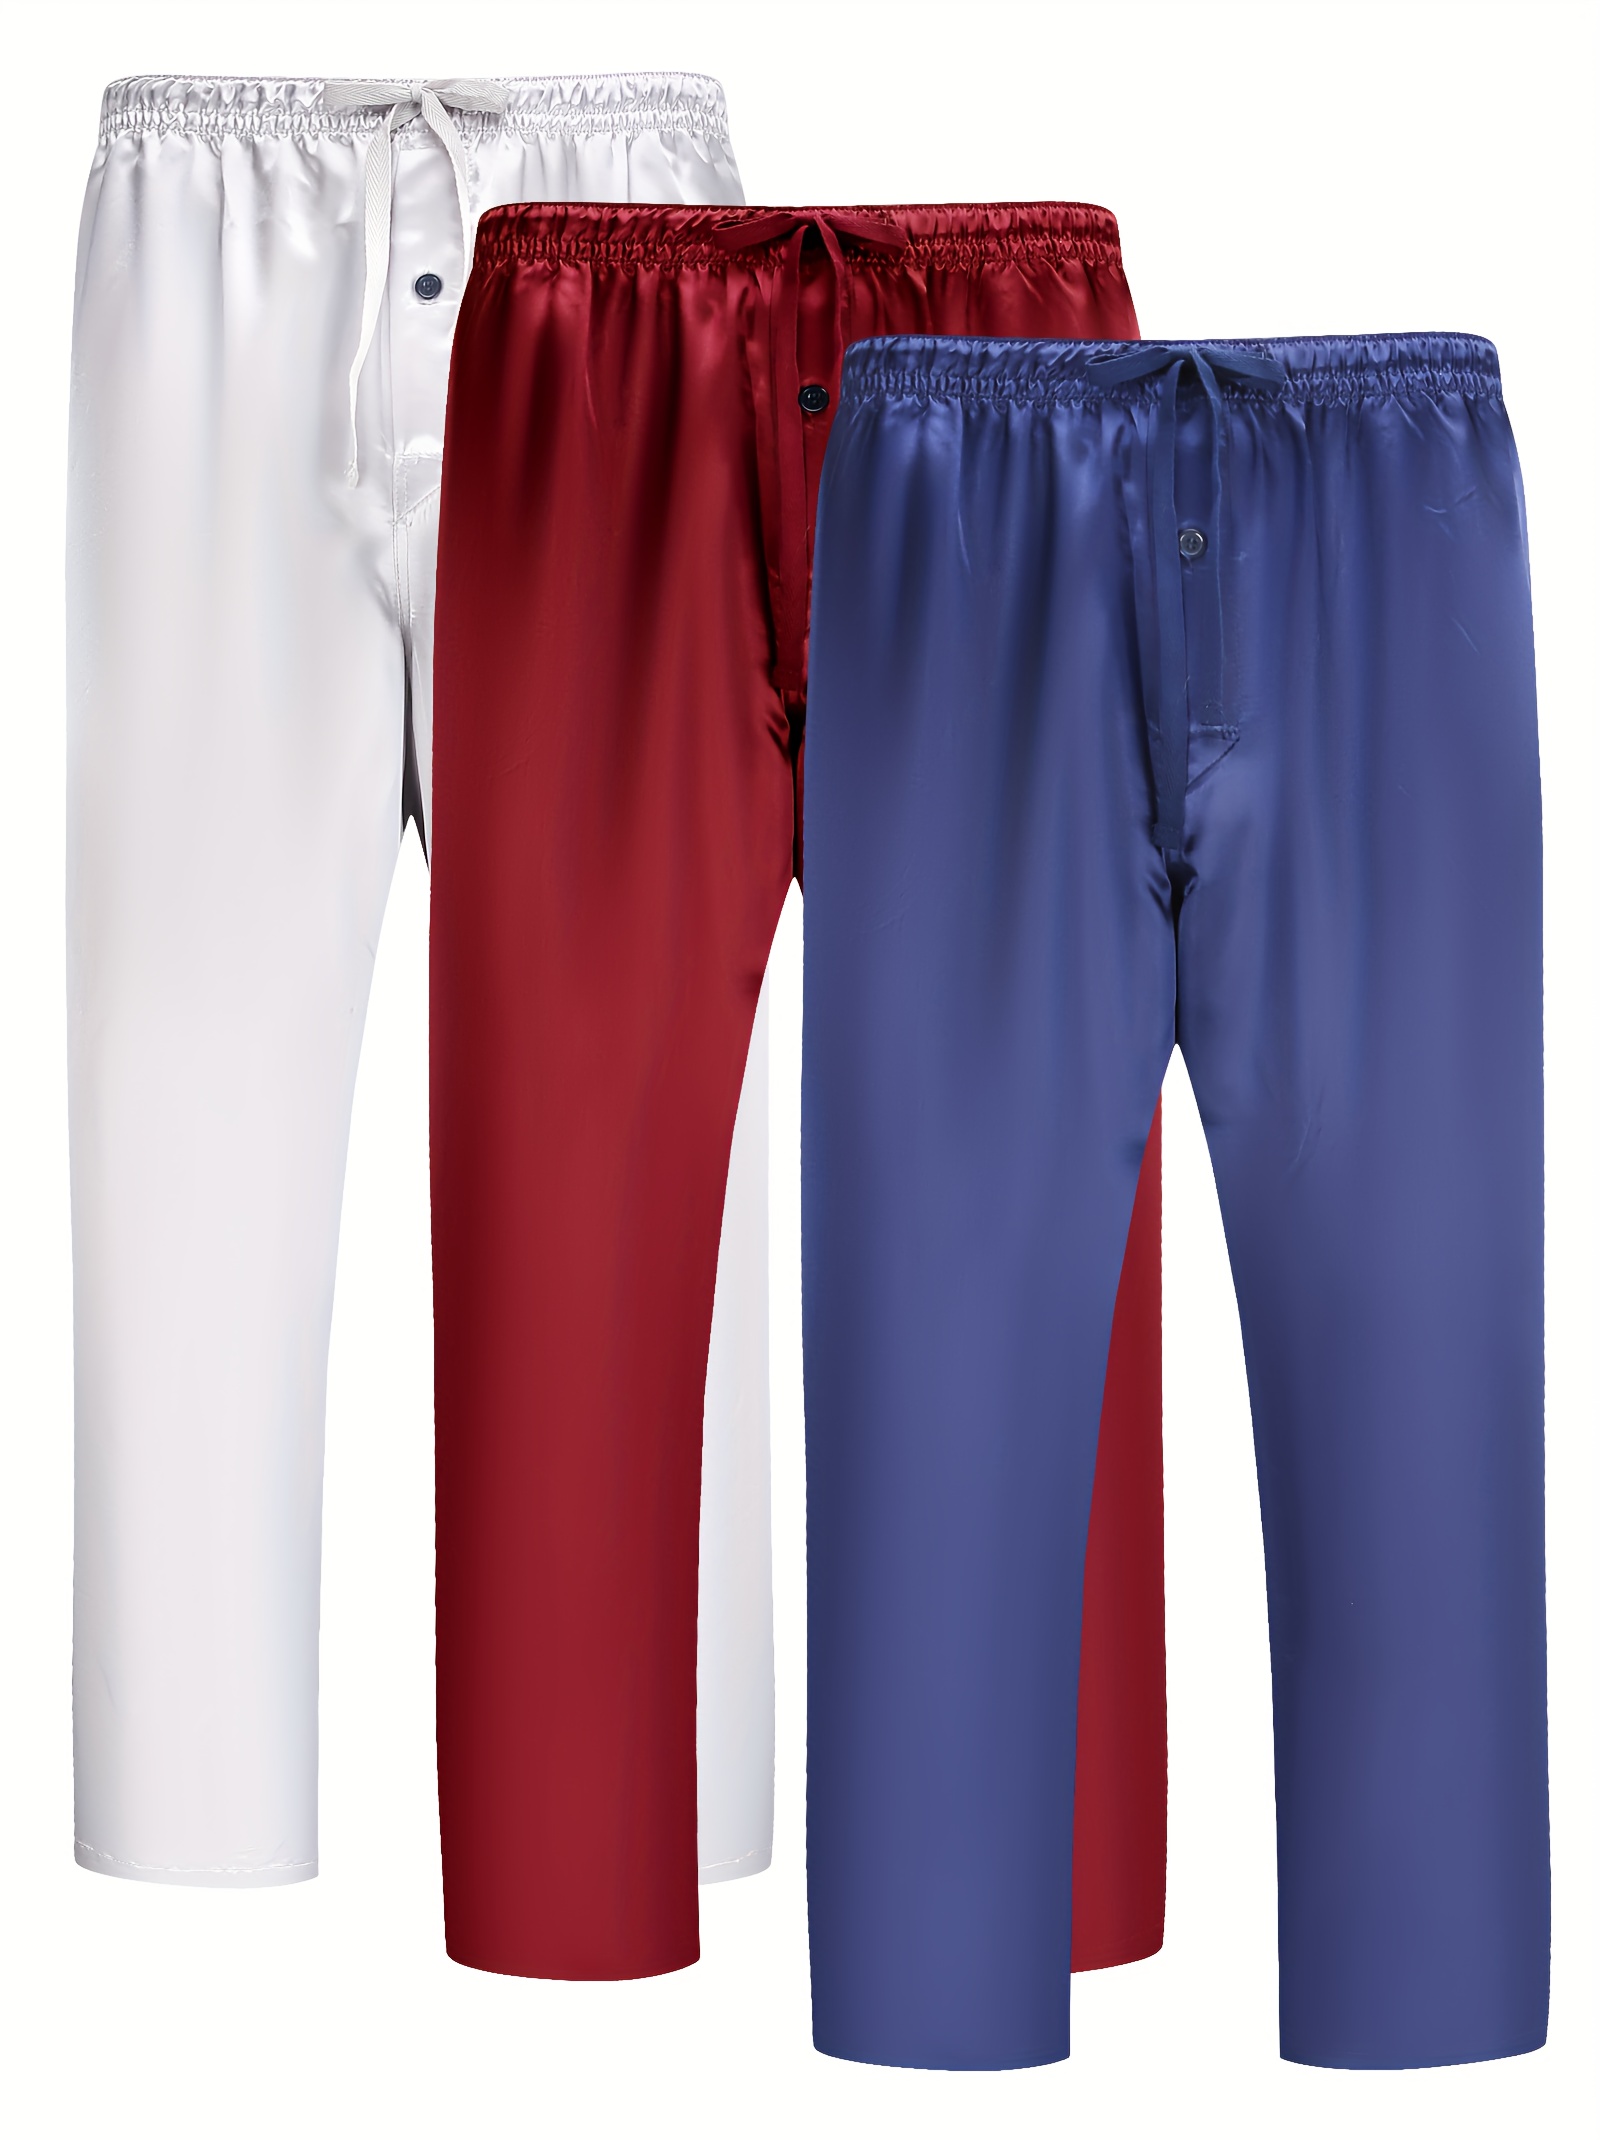 Men's Ice Silk Pants Elastic Trousers Big Pockets Casual Bottoms